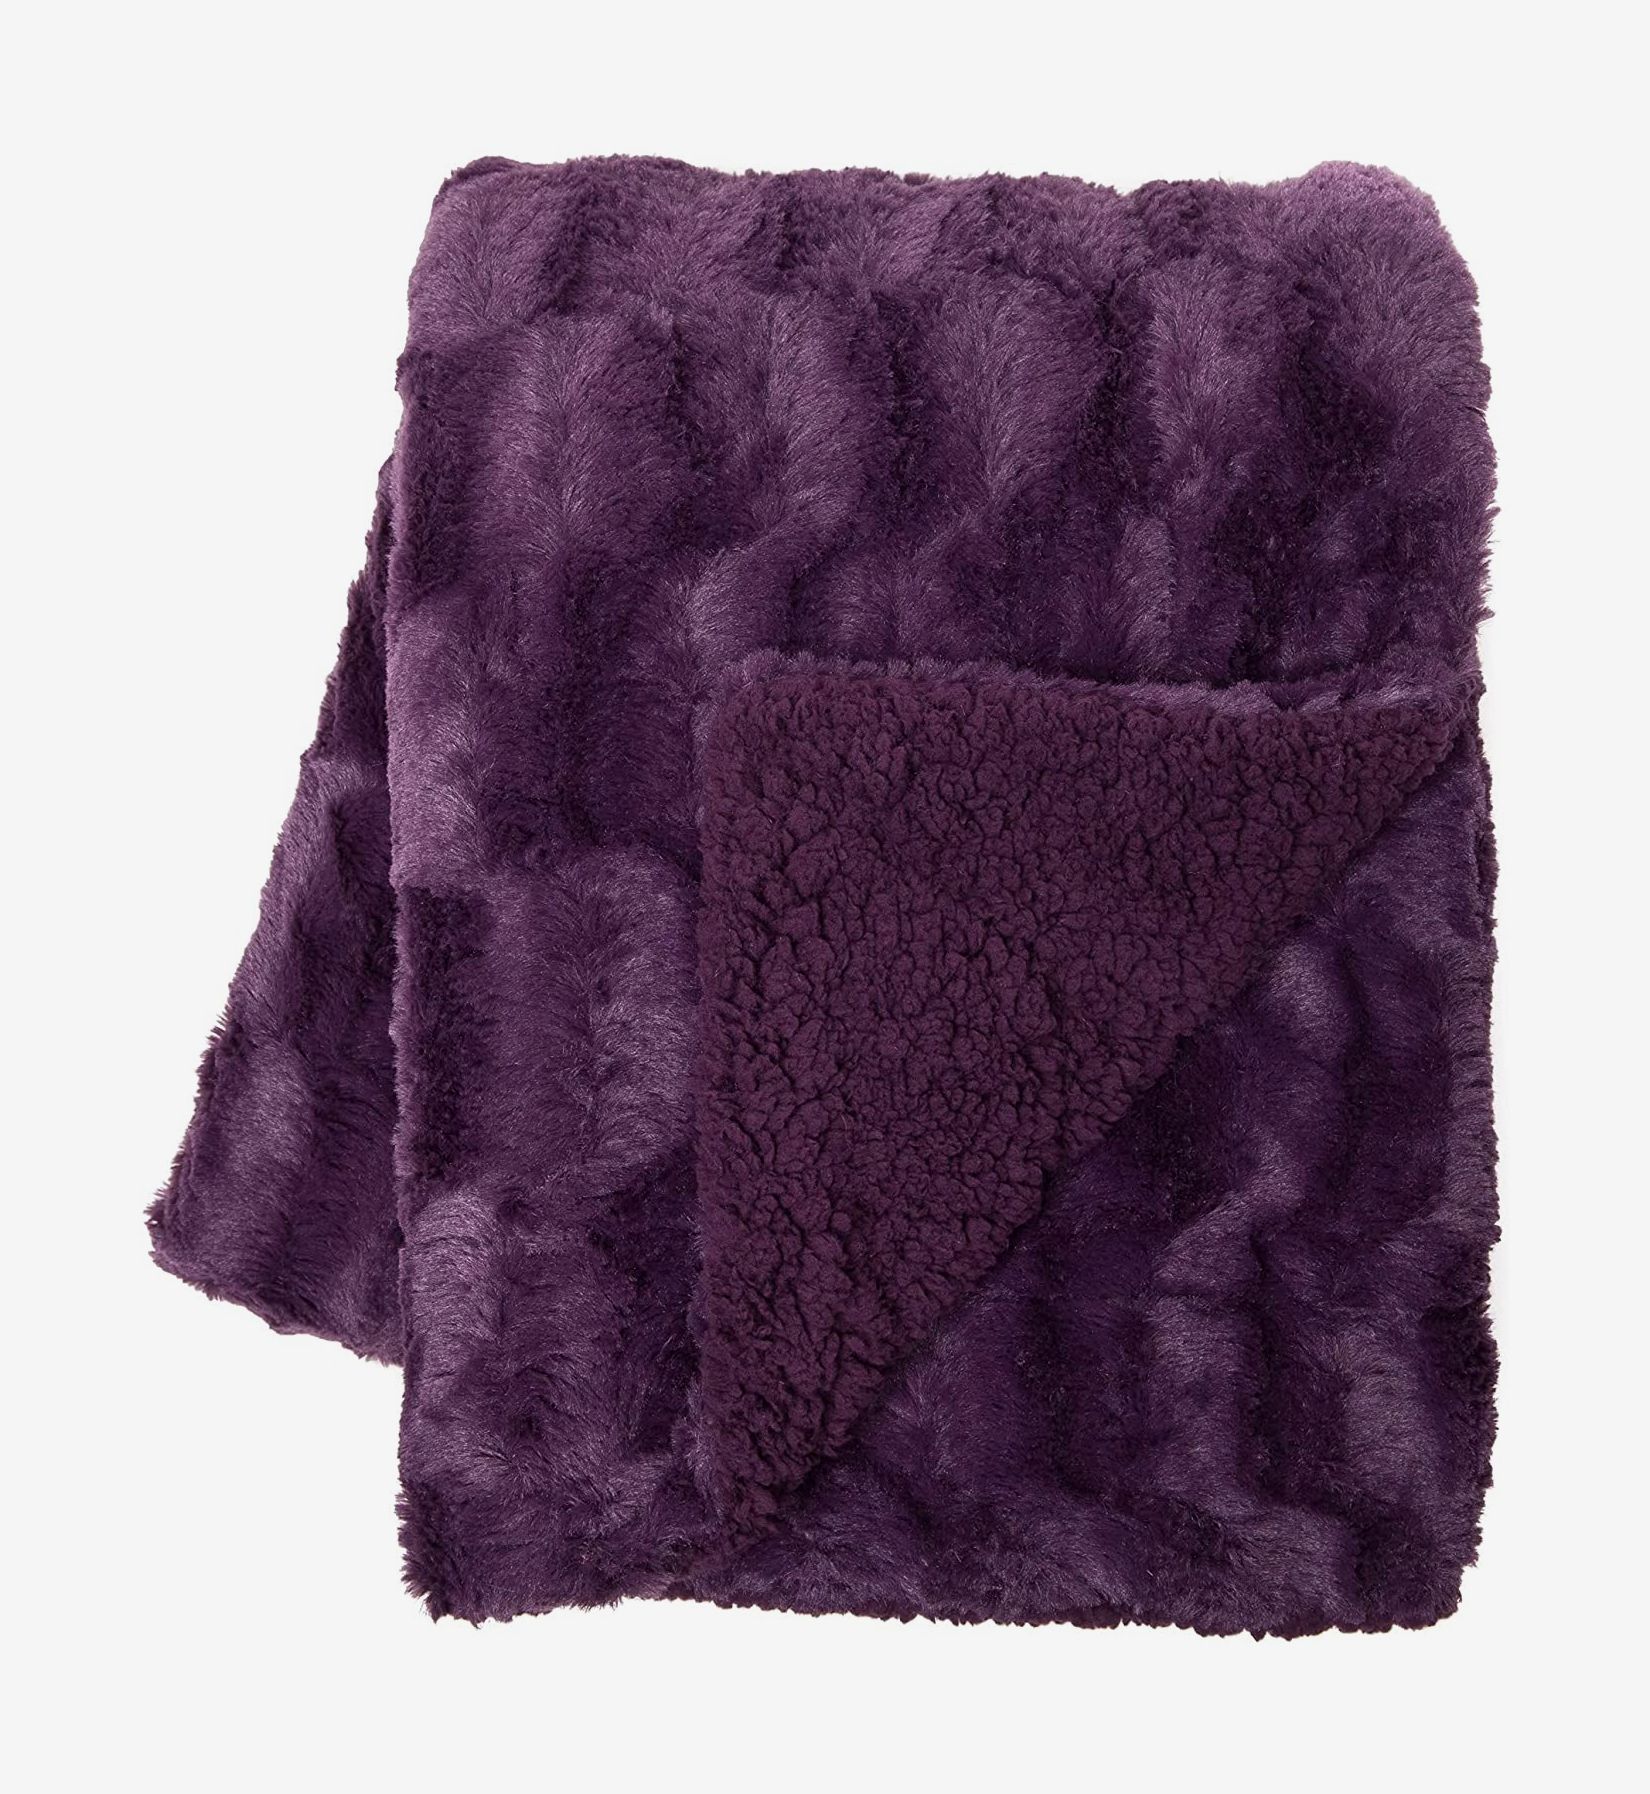 Luxury Aubergine Plain Throws Blanket Cosy Fleece Blanket Small Medium Large 